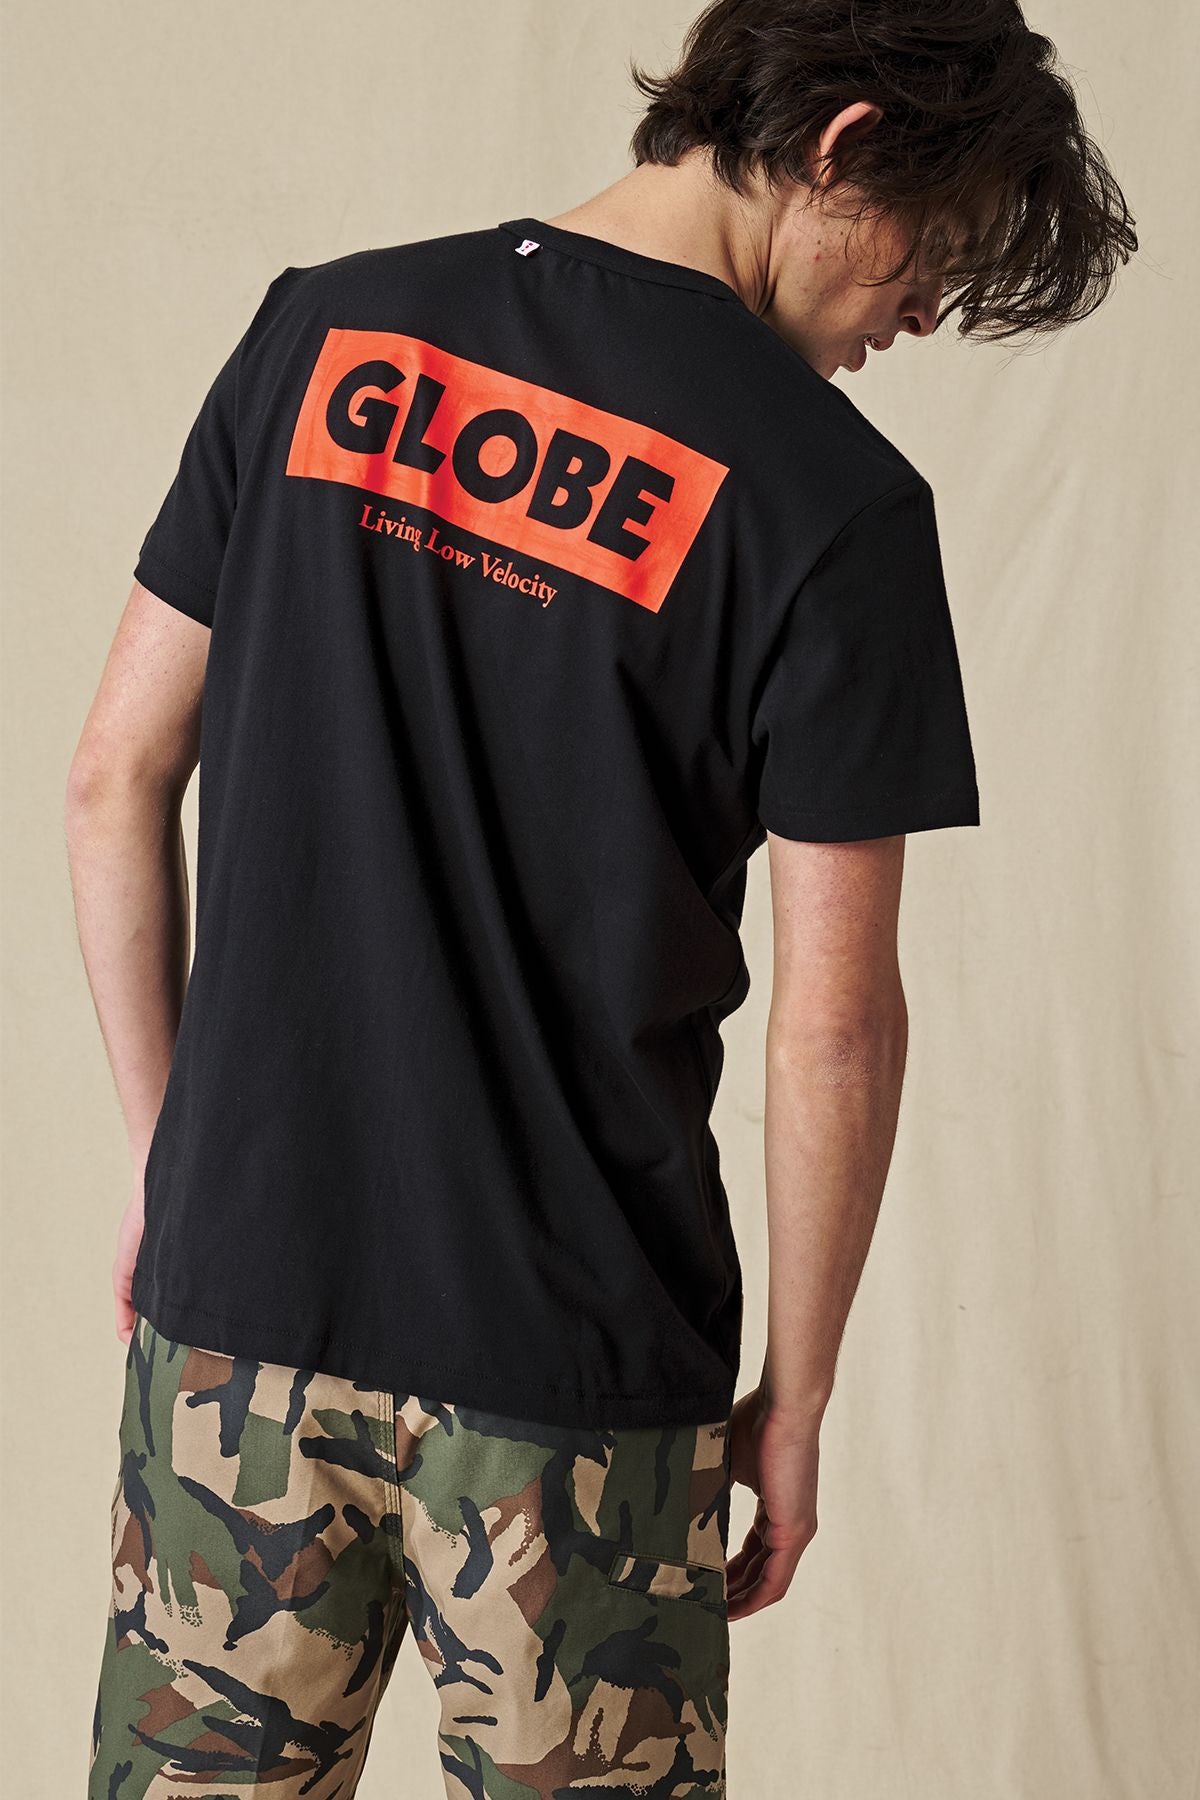 GLOBE Globe LV - Tee-shirt - Men's - black - Private Sport Shop